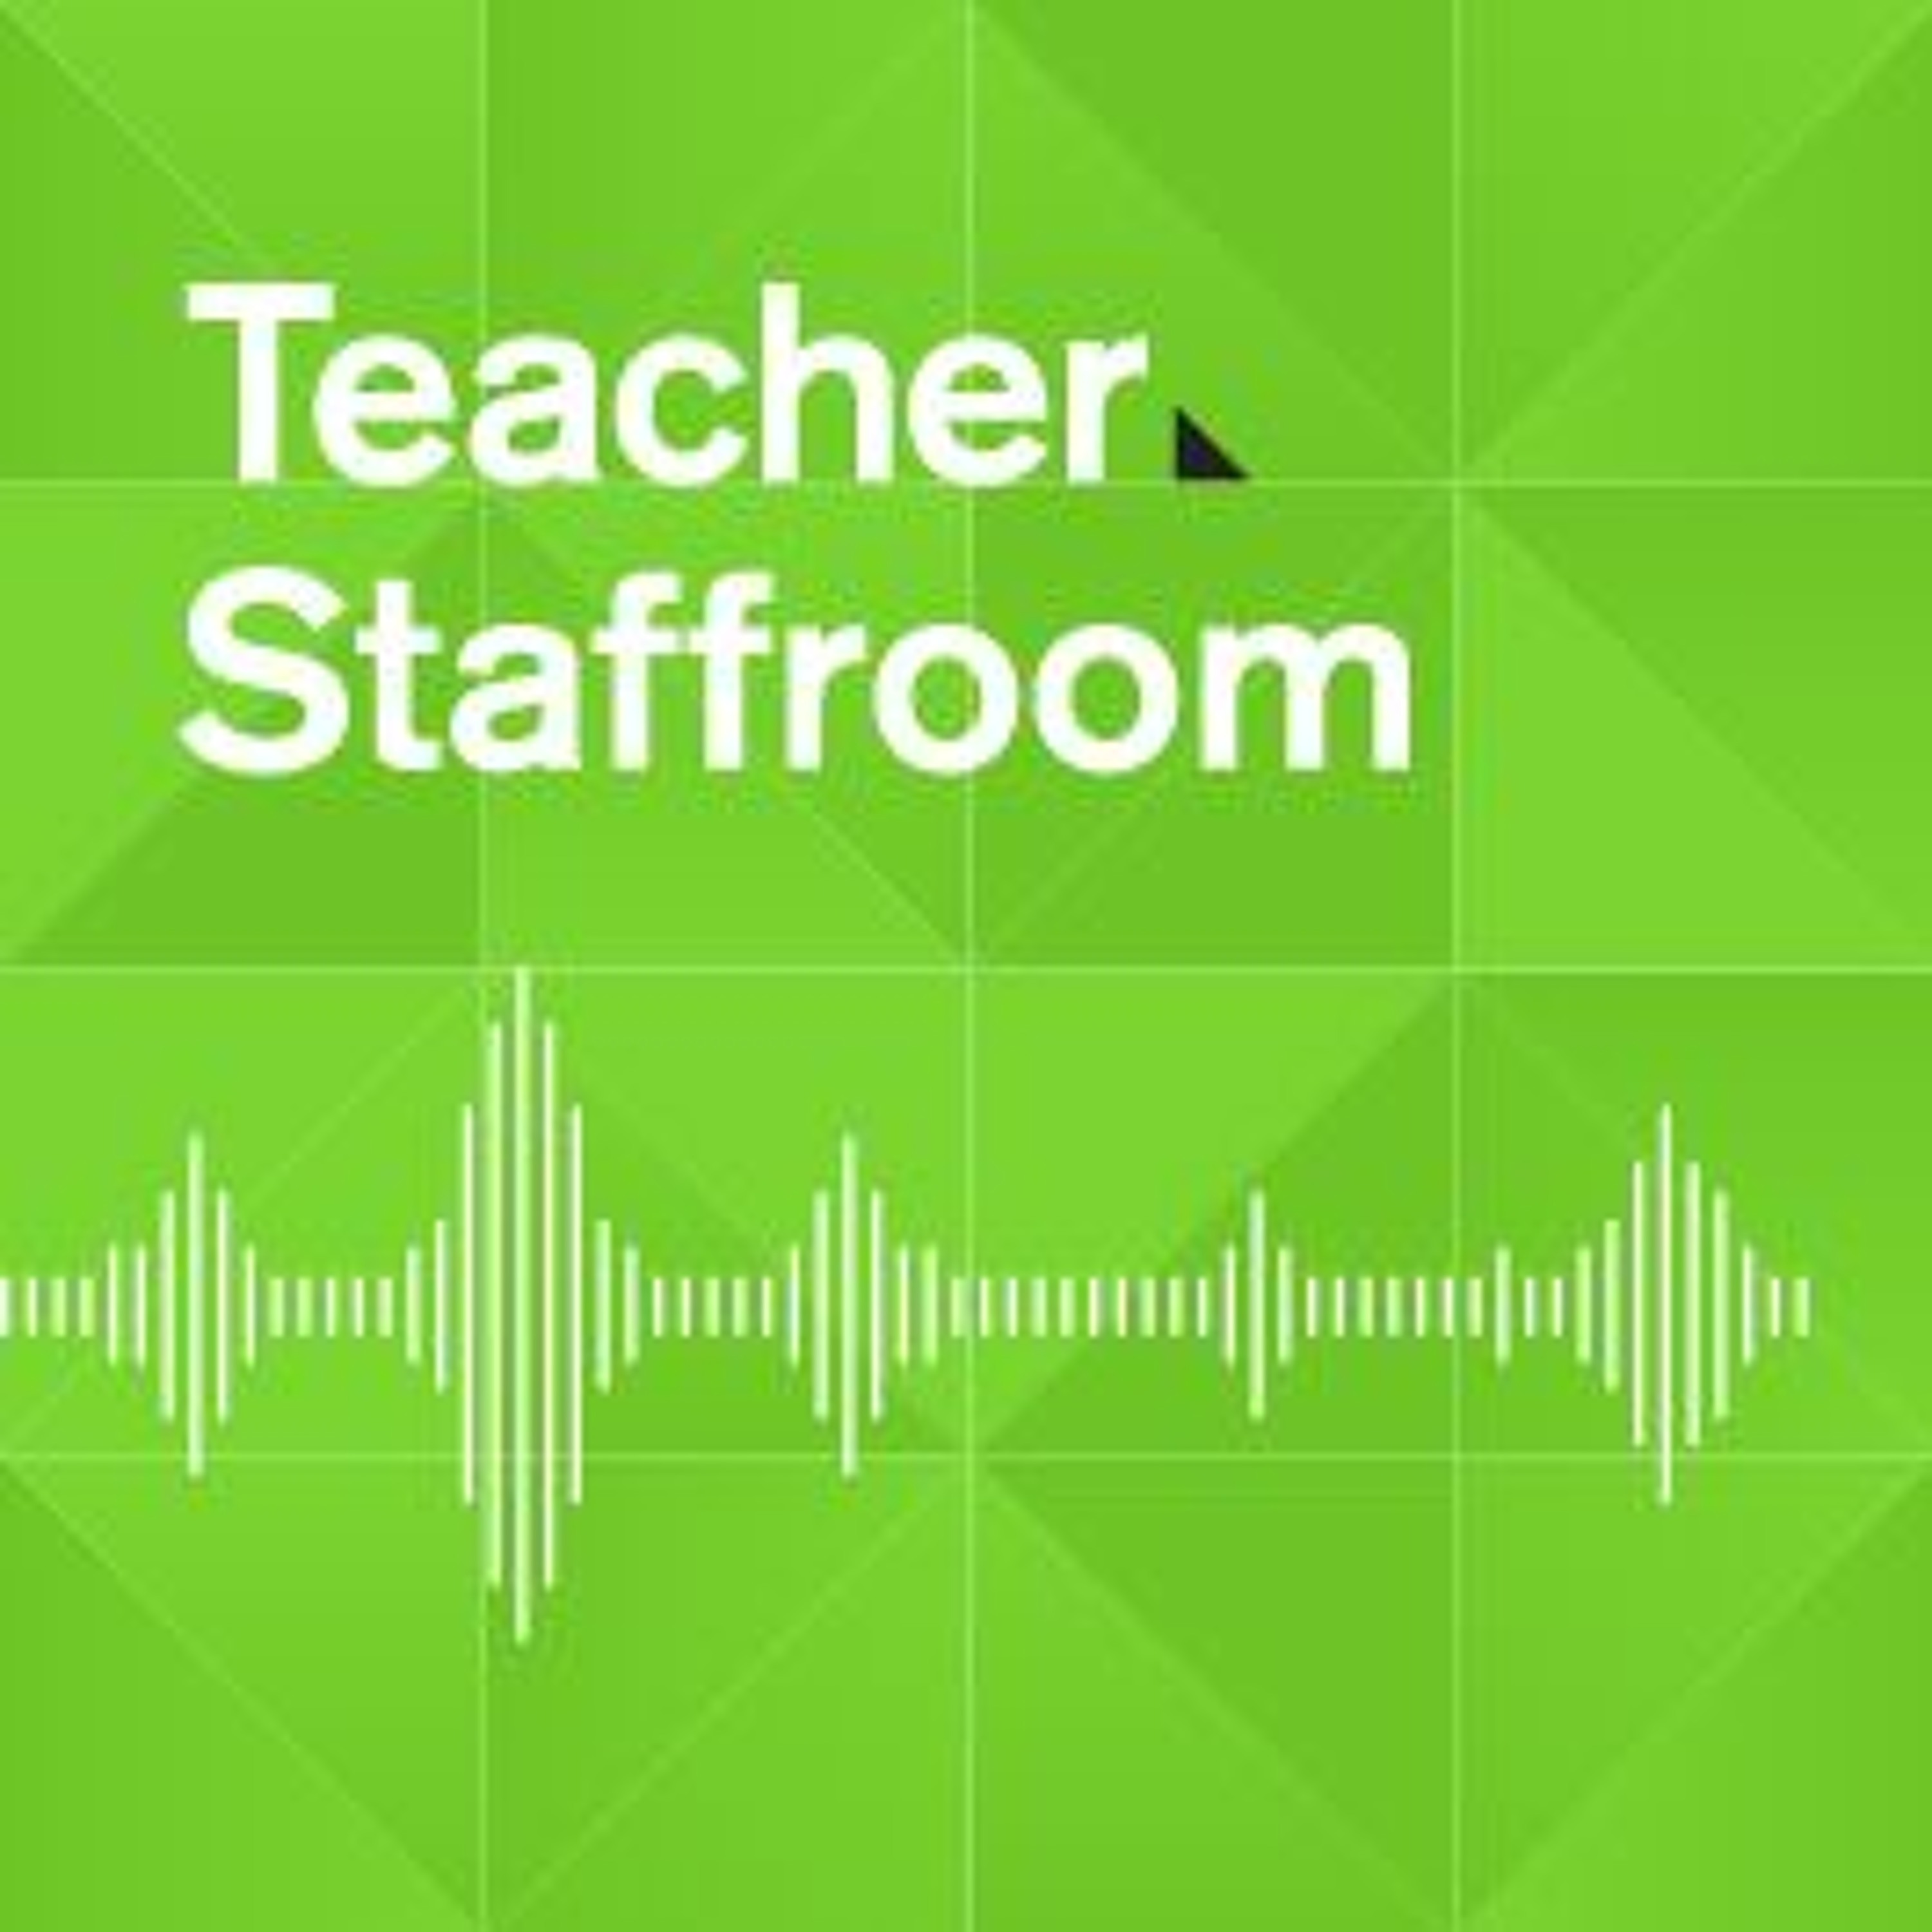 Teacher Staffroom: Exploring topics important to you